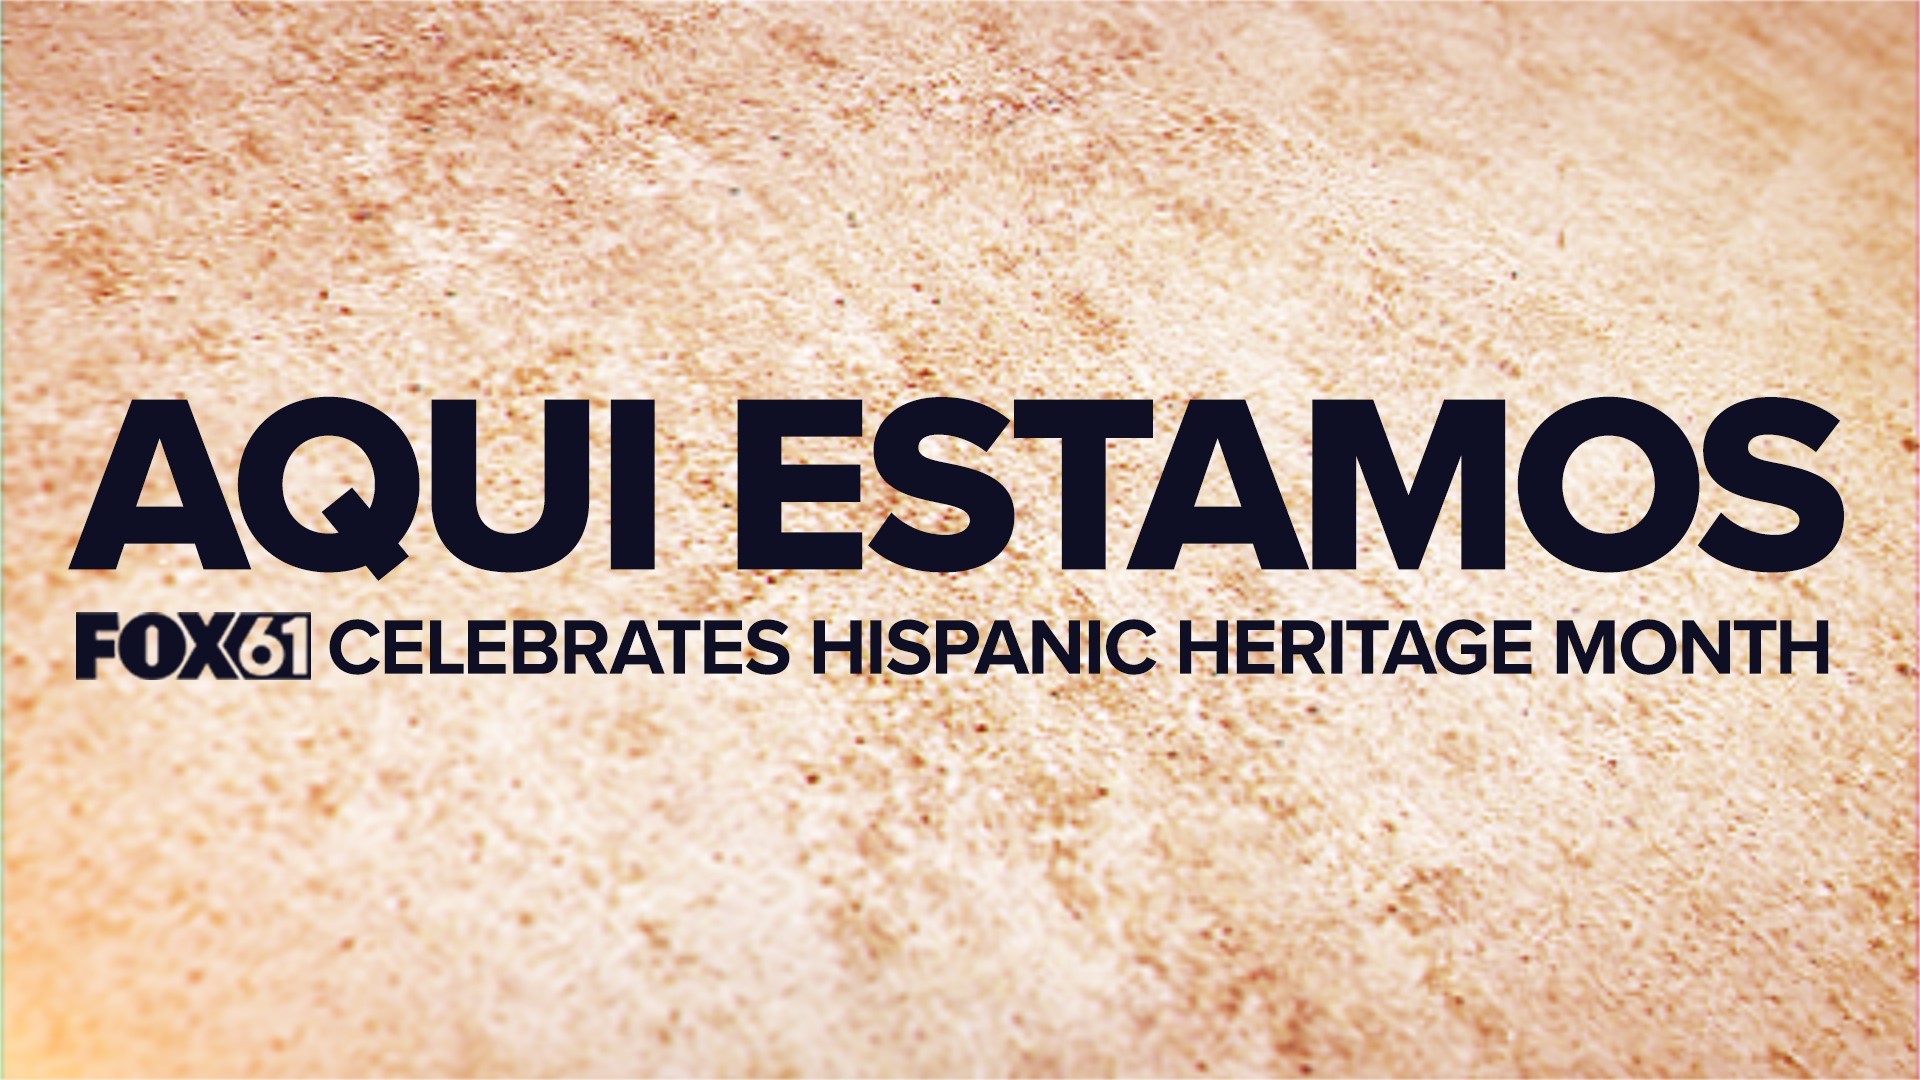 "Aqui Estamos: FOX61 Celebrates Hispanic Heritage Month" honors the contributions the Latino community has made in Connecticut.